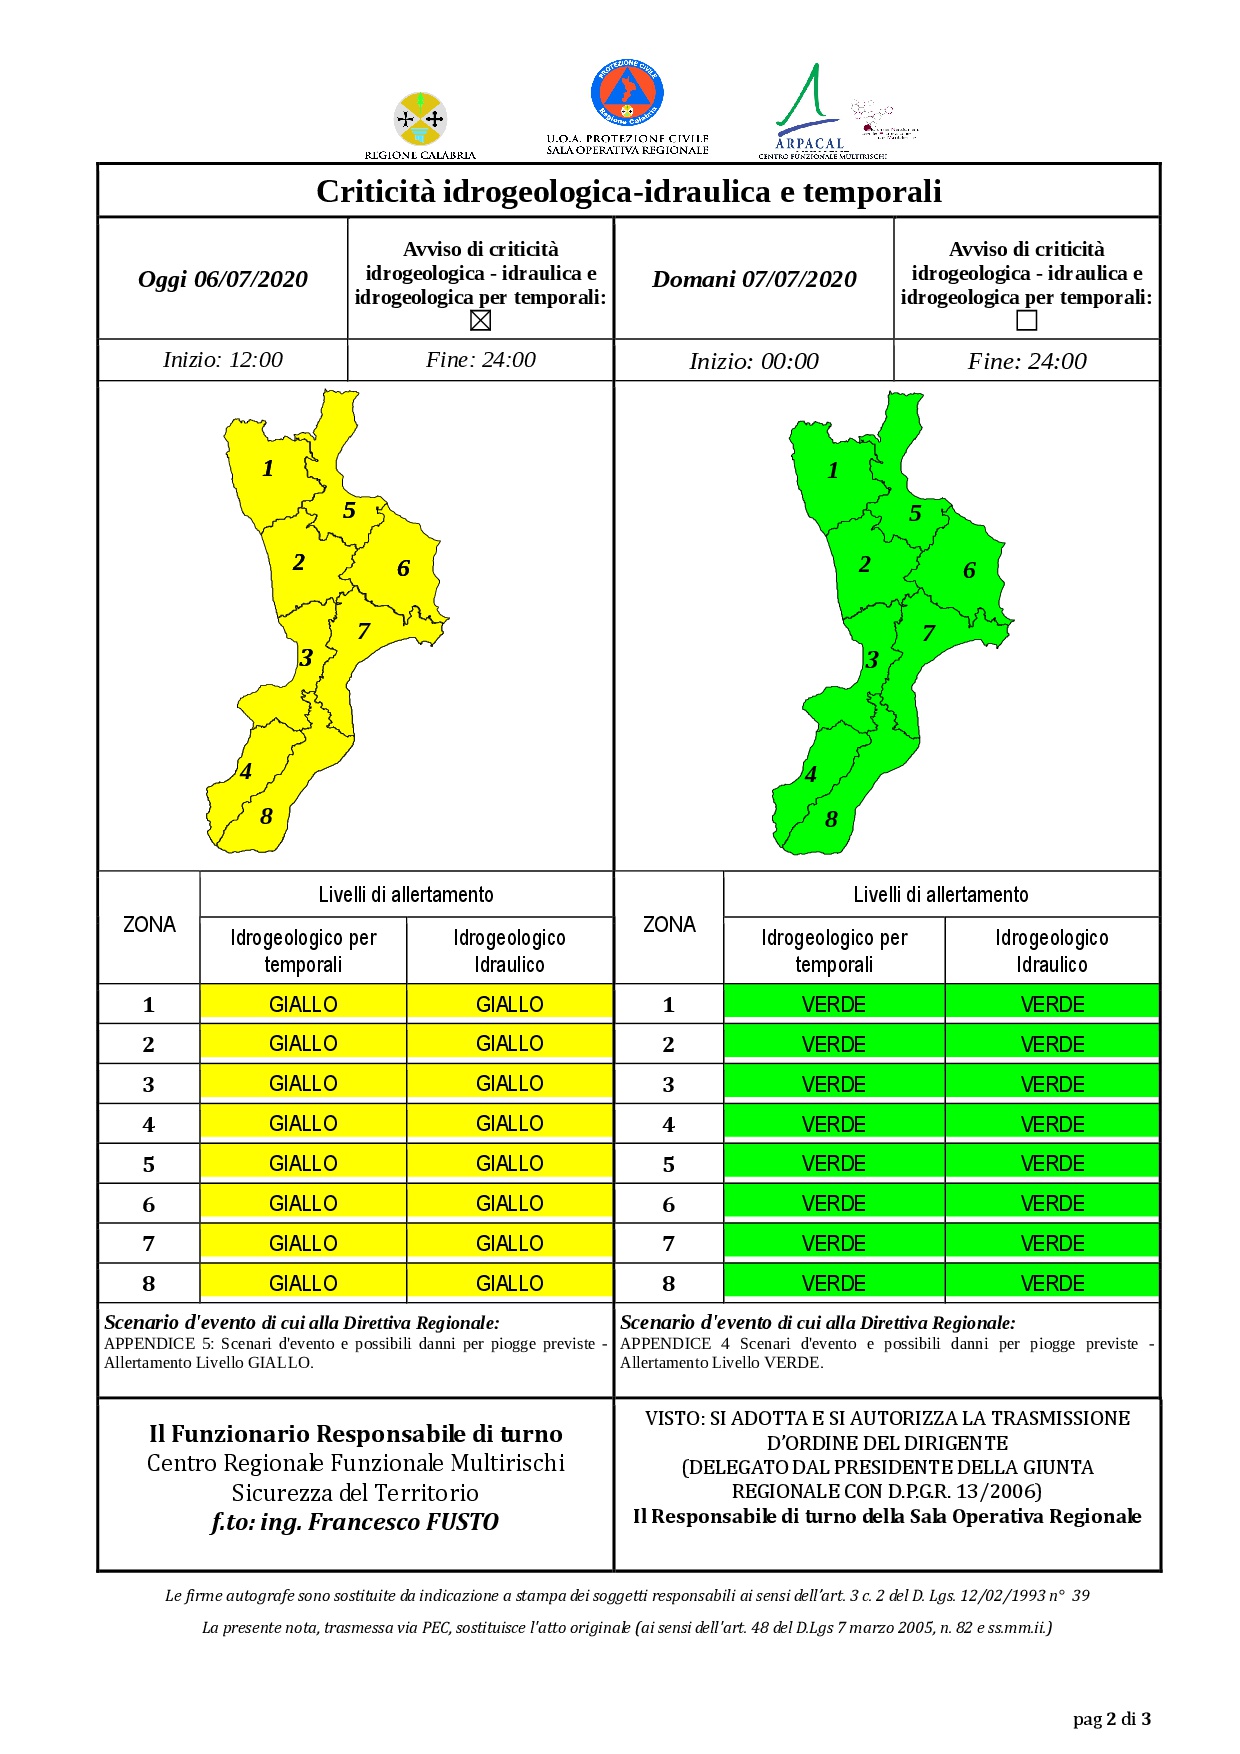 Criticità idrogeologica-idraulica e temporali in Calabria 06-07-2020